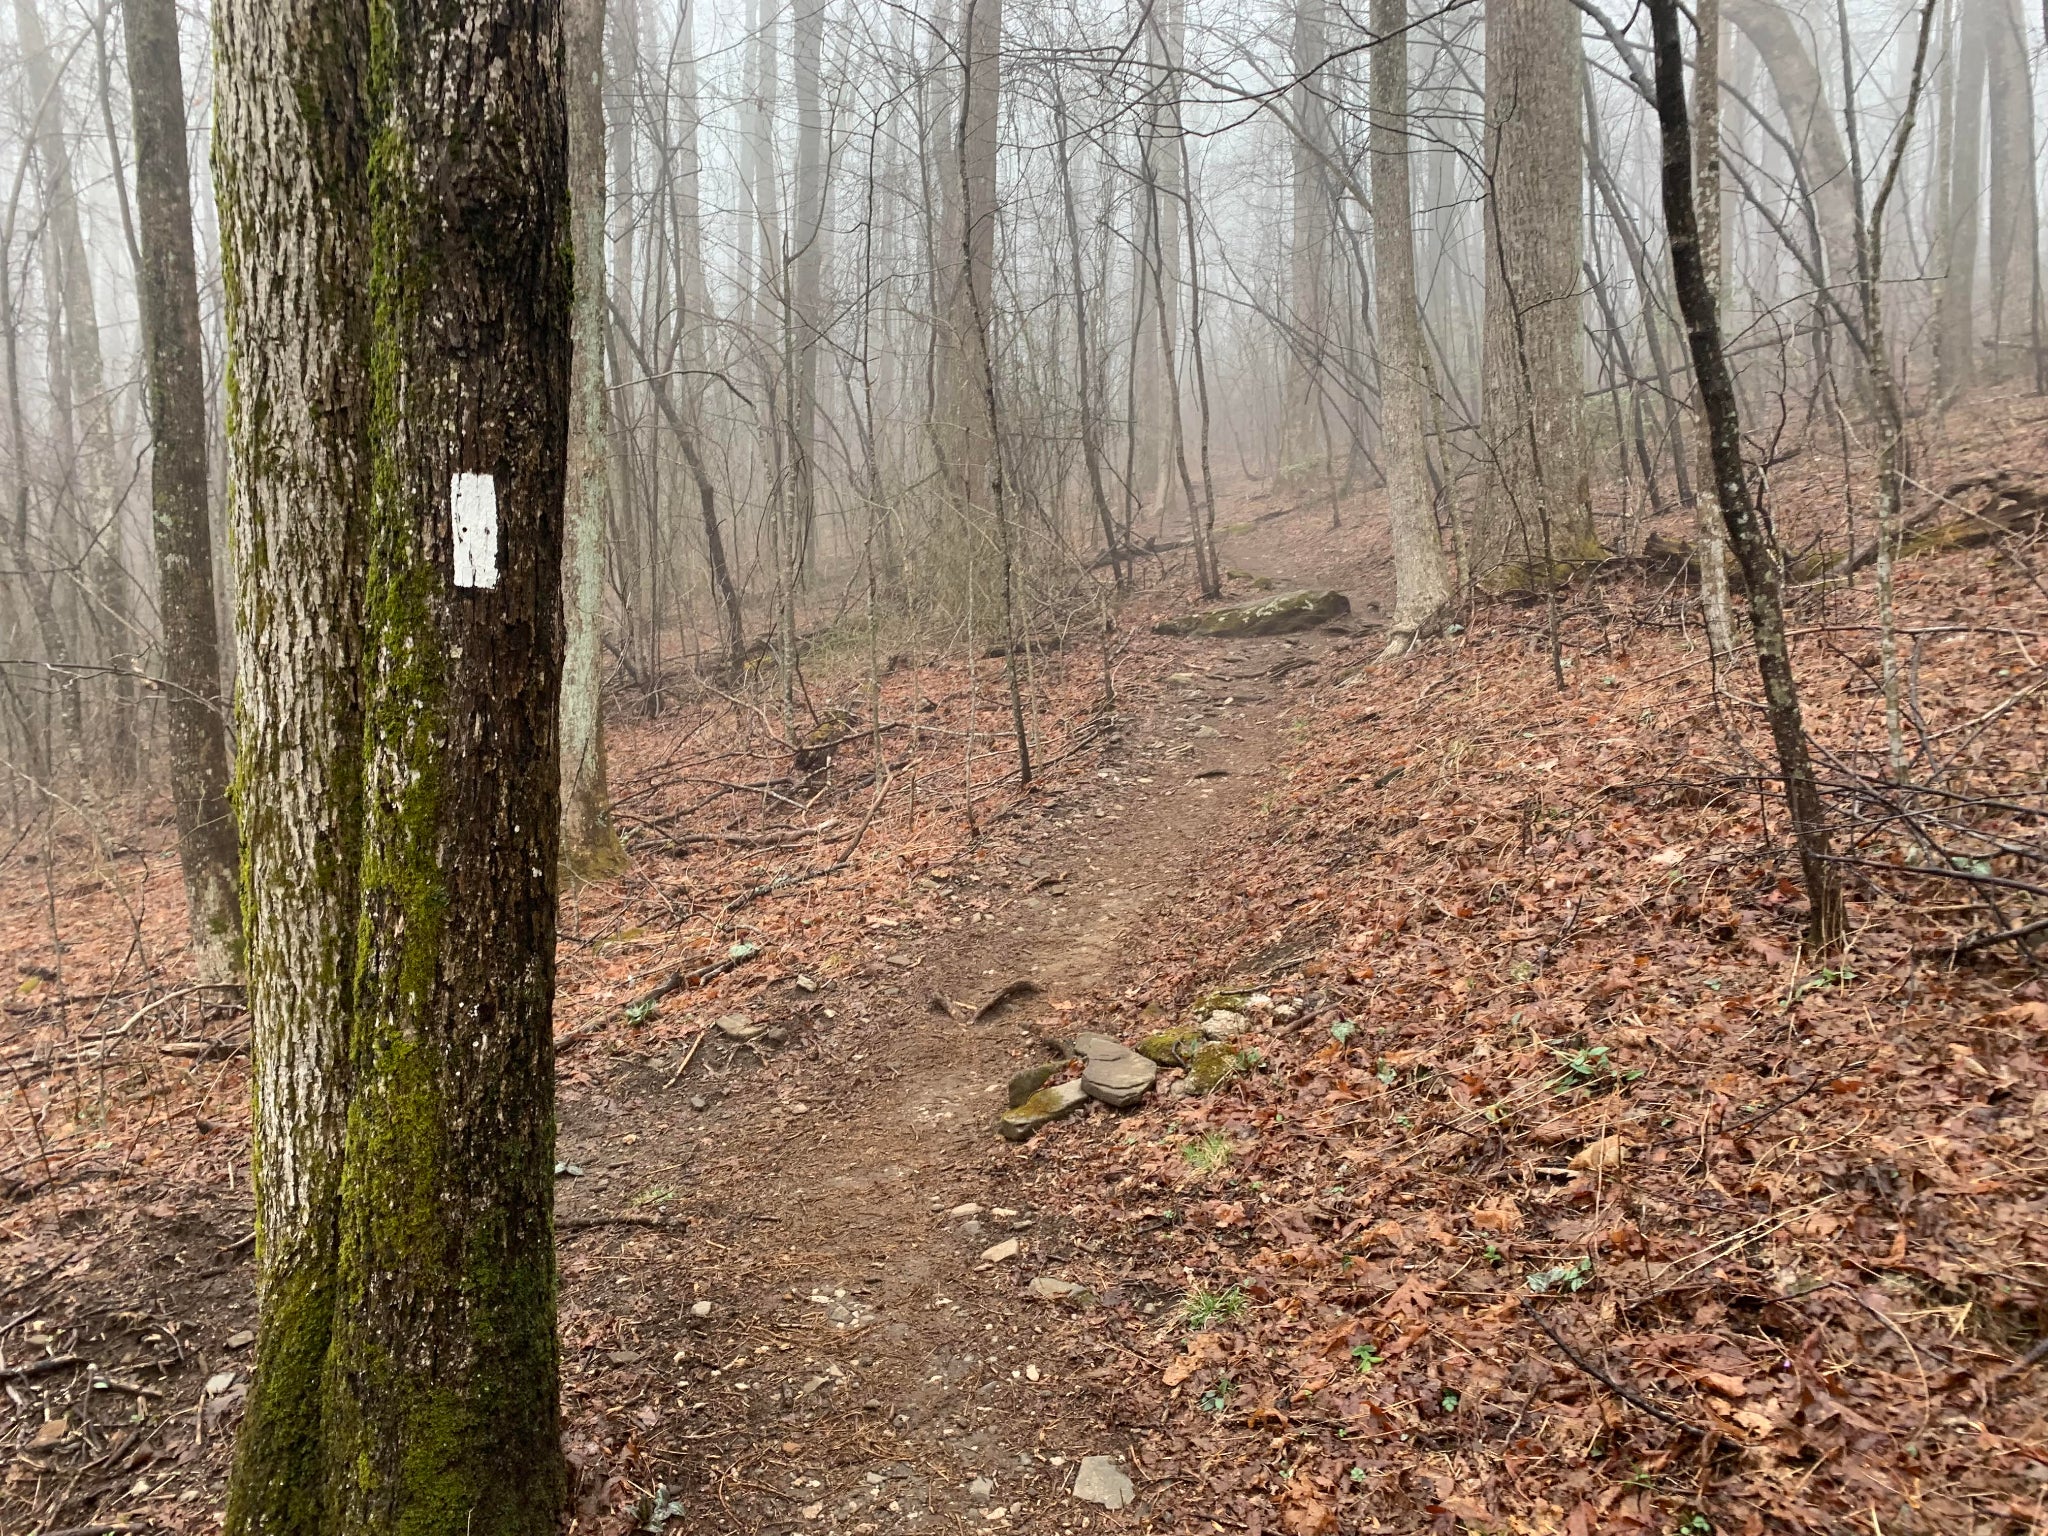 Georgia Loop - March 2019 - Appalachian Trail section